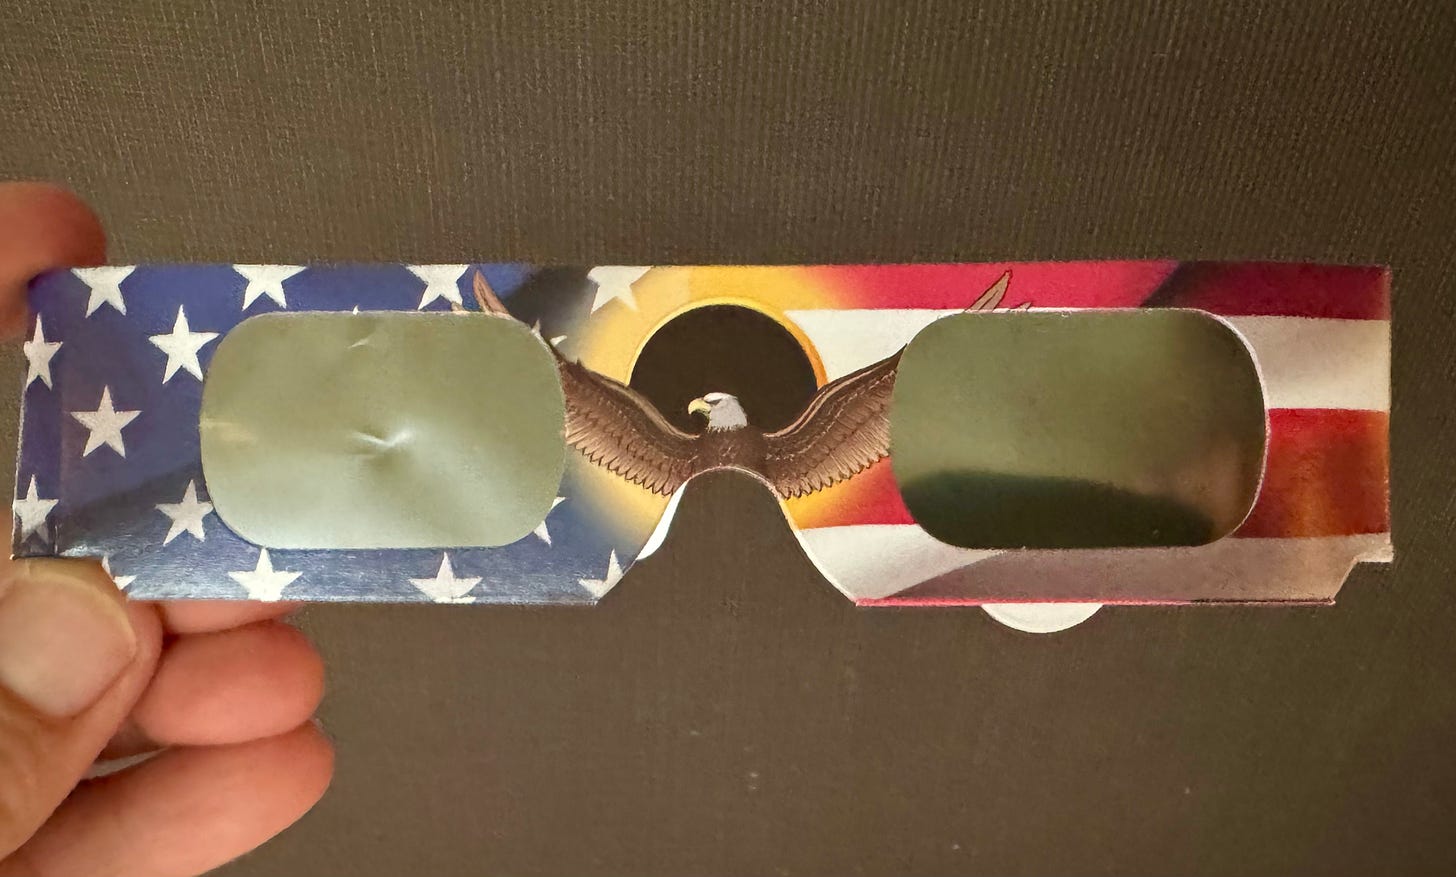 Eclipse glasses with American flag design, including bald eagle